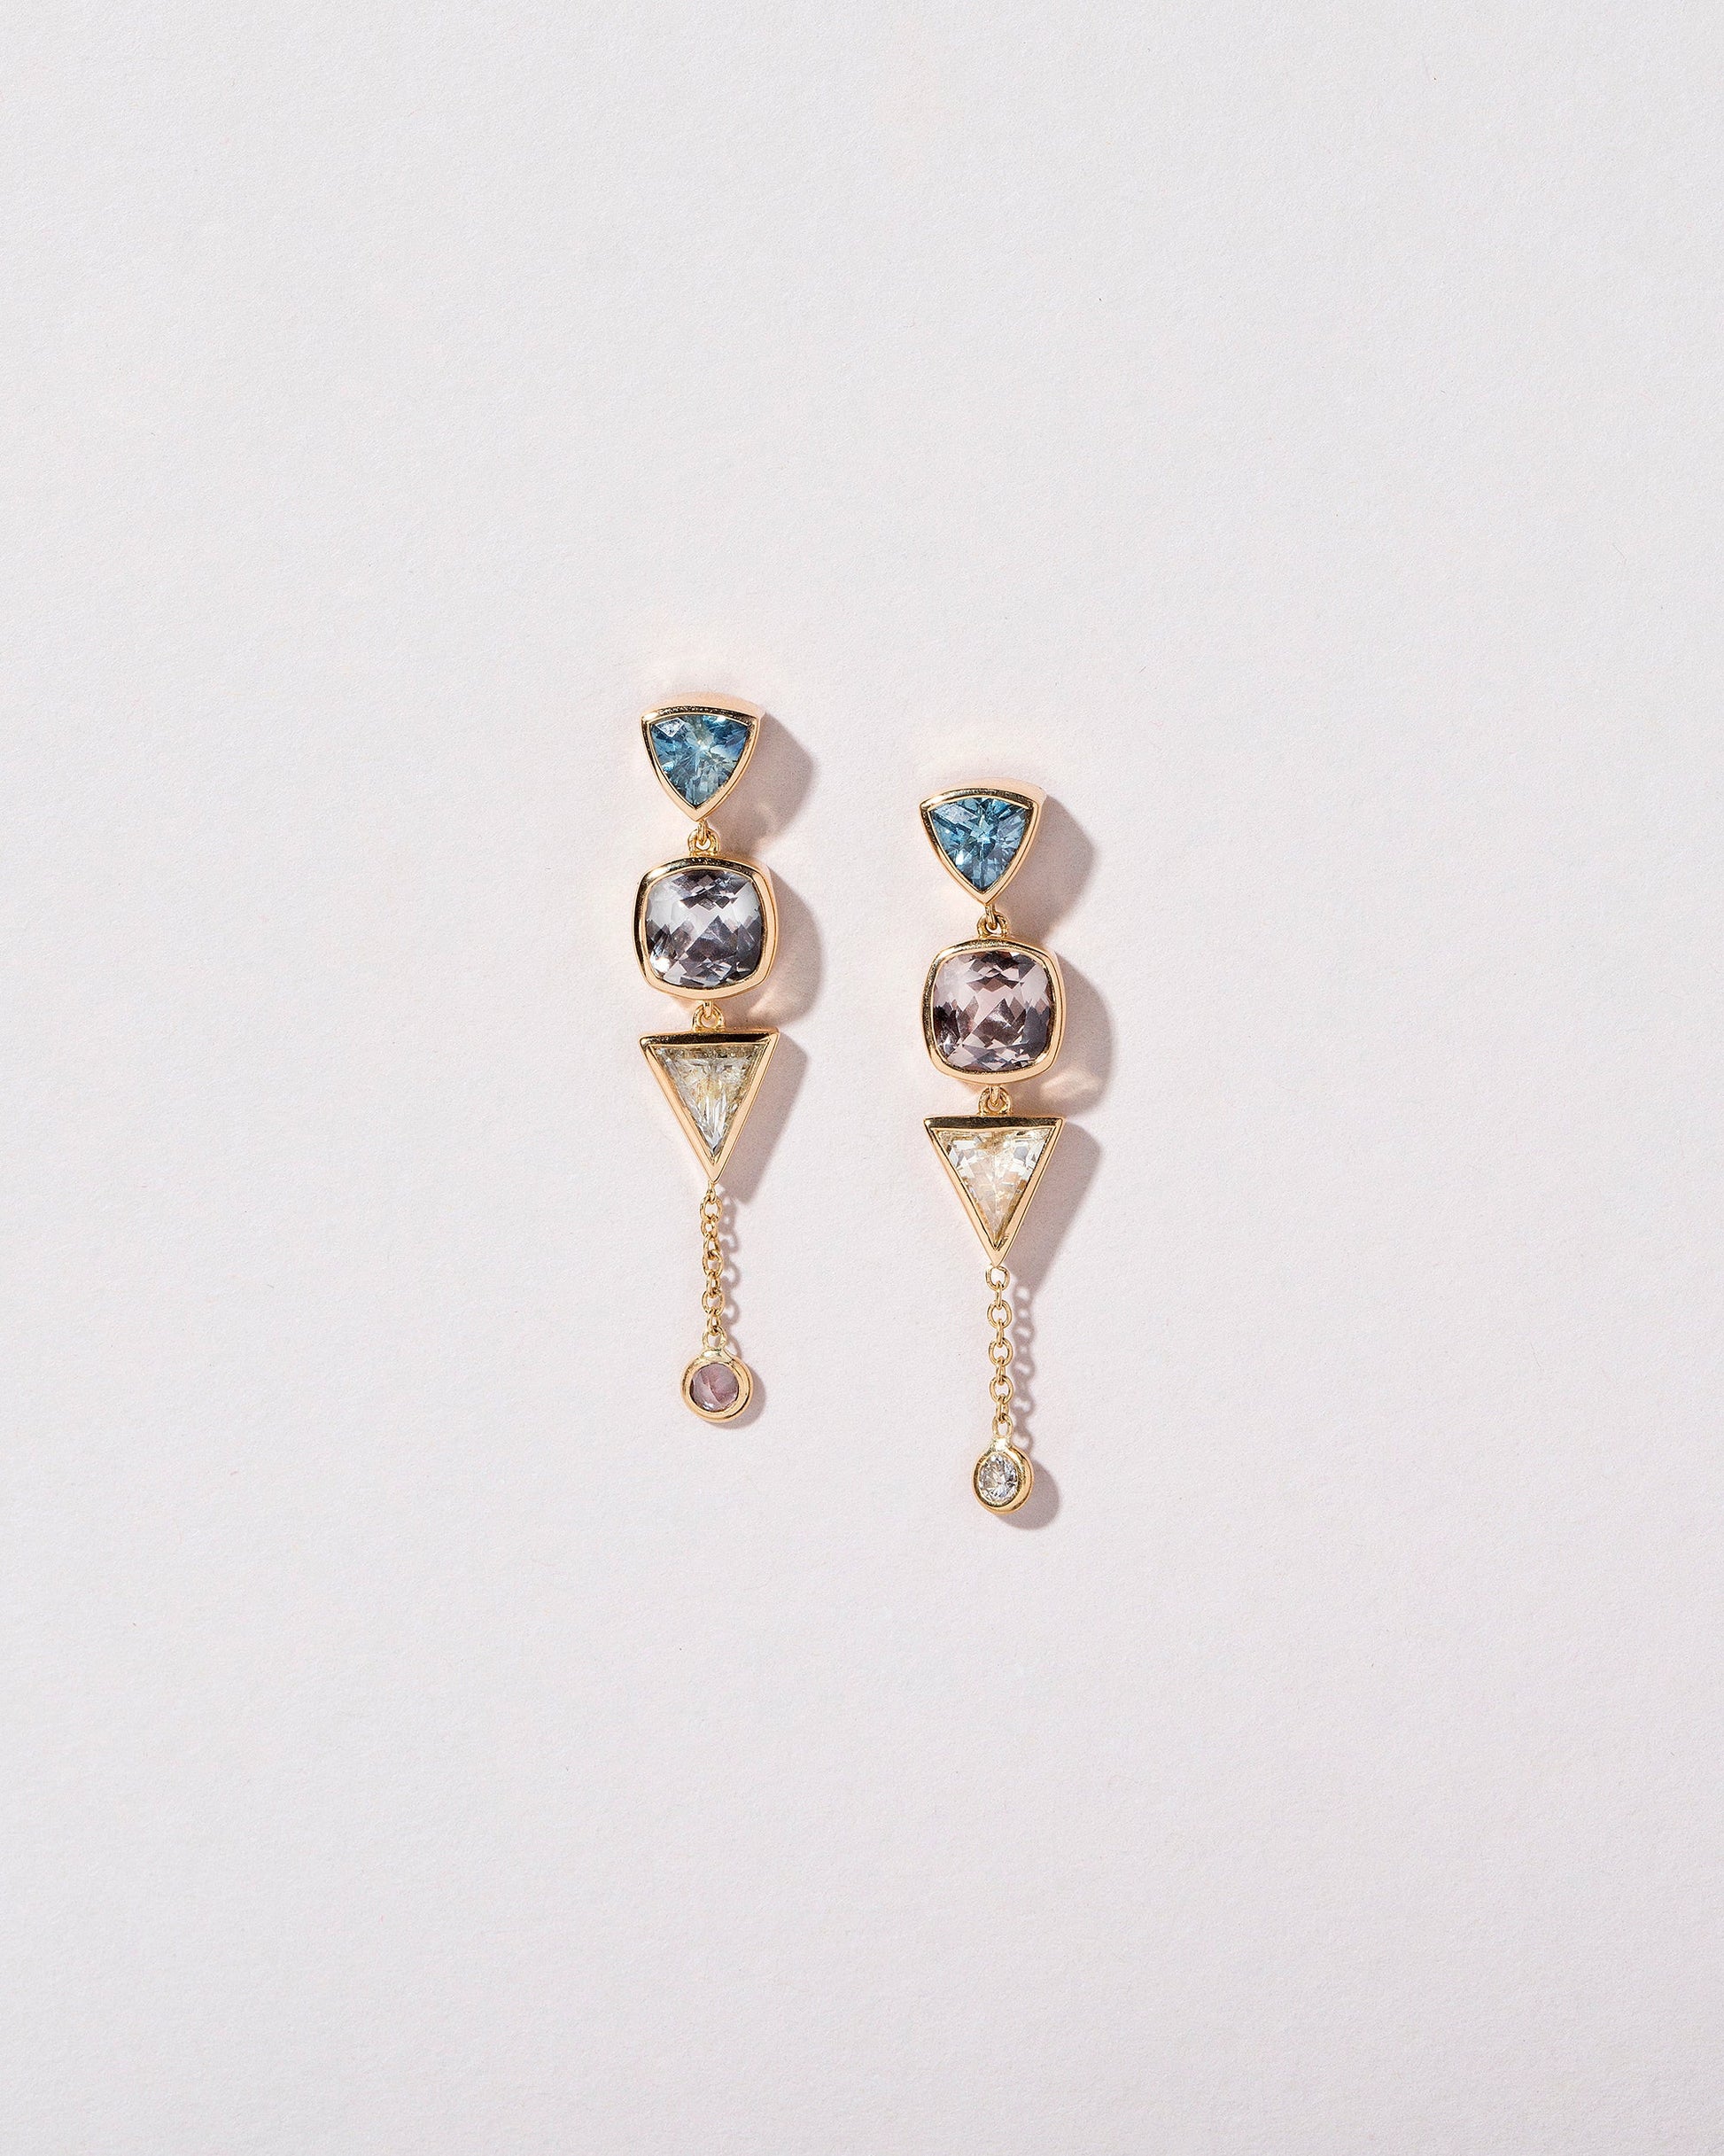  Trillion Cut Sapphire Cluster Earrings - Final Sale on light color background.